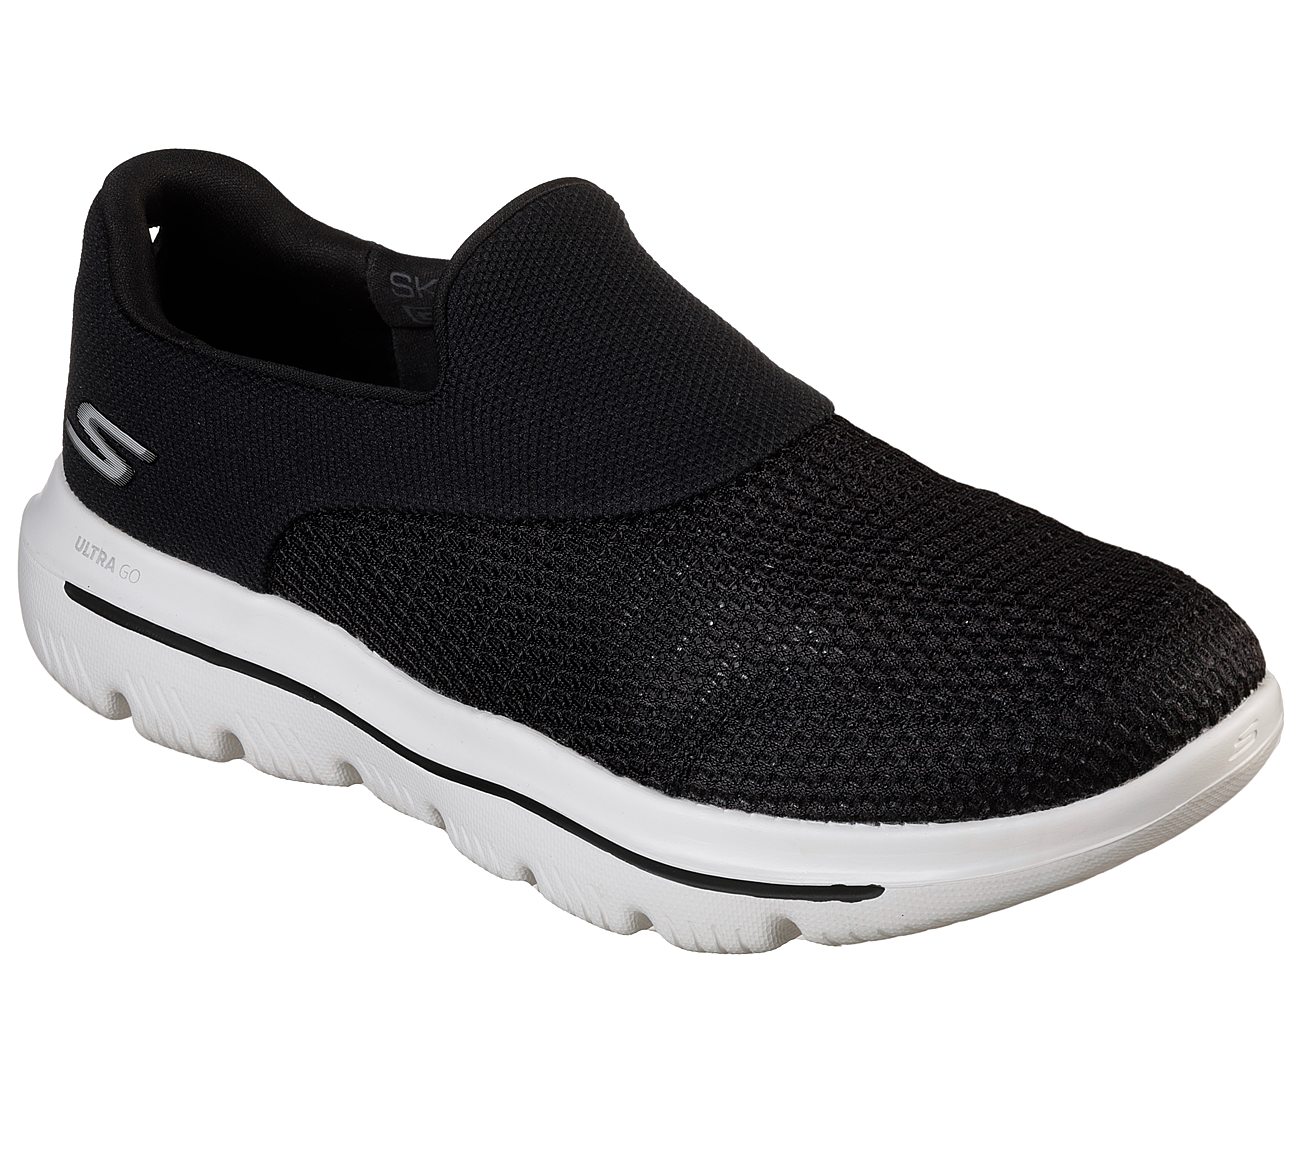 GO WALK EVOLUTION ULTRA-JAUNT, BLACK/WHITE Footwear Lateral View